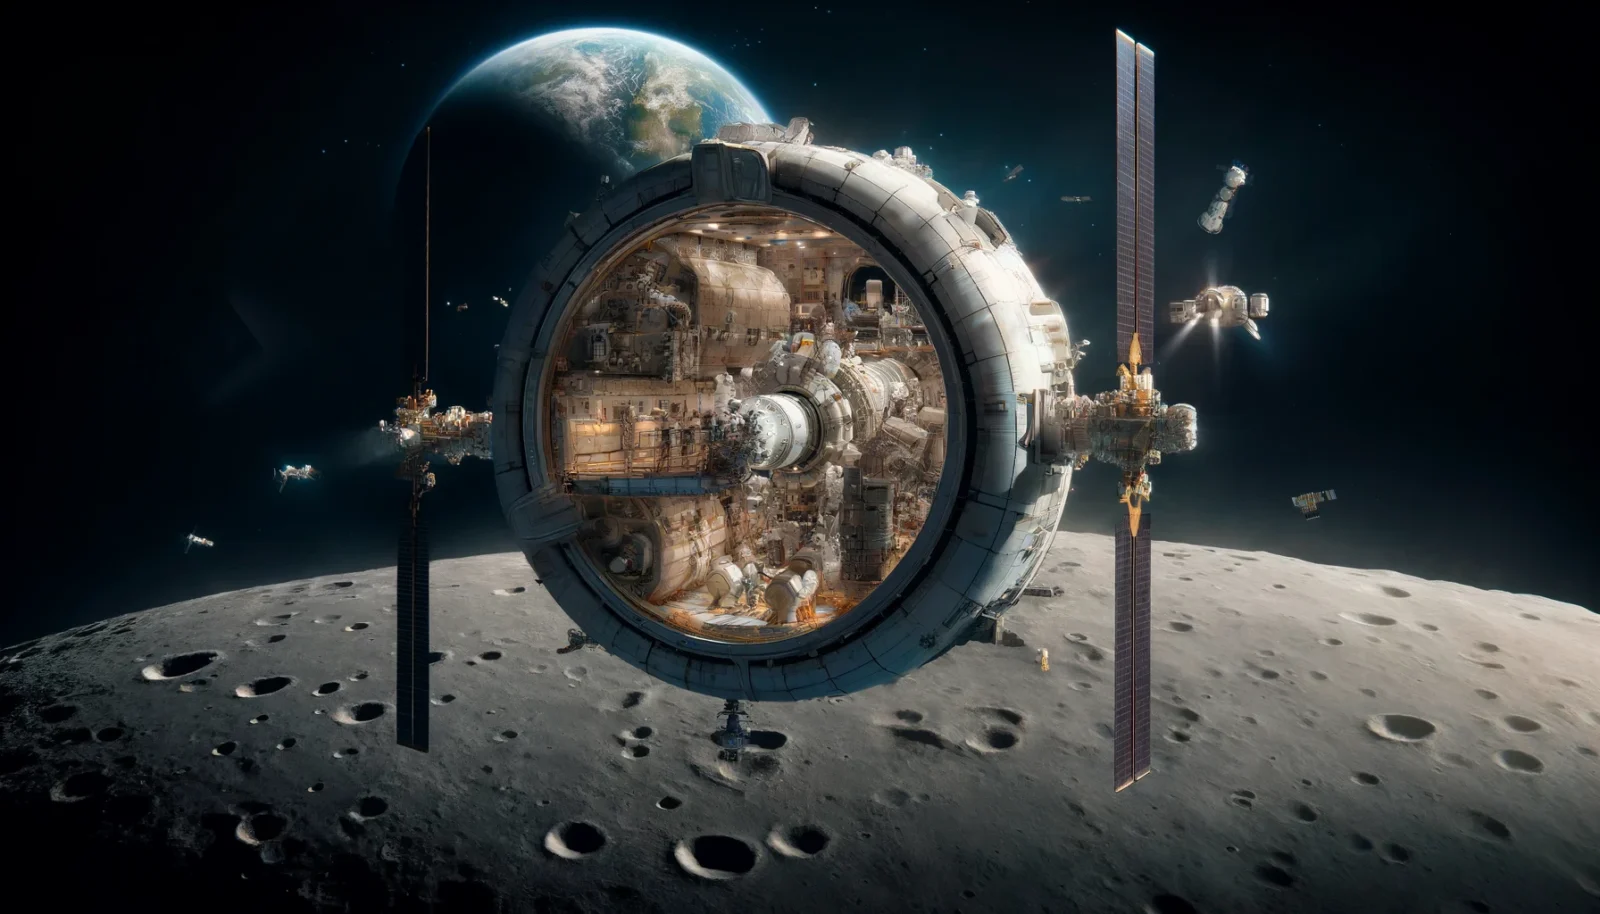 Lunar Gateway: Space Station Orbiting the Moon